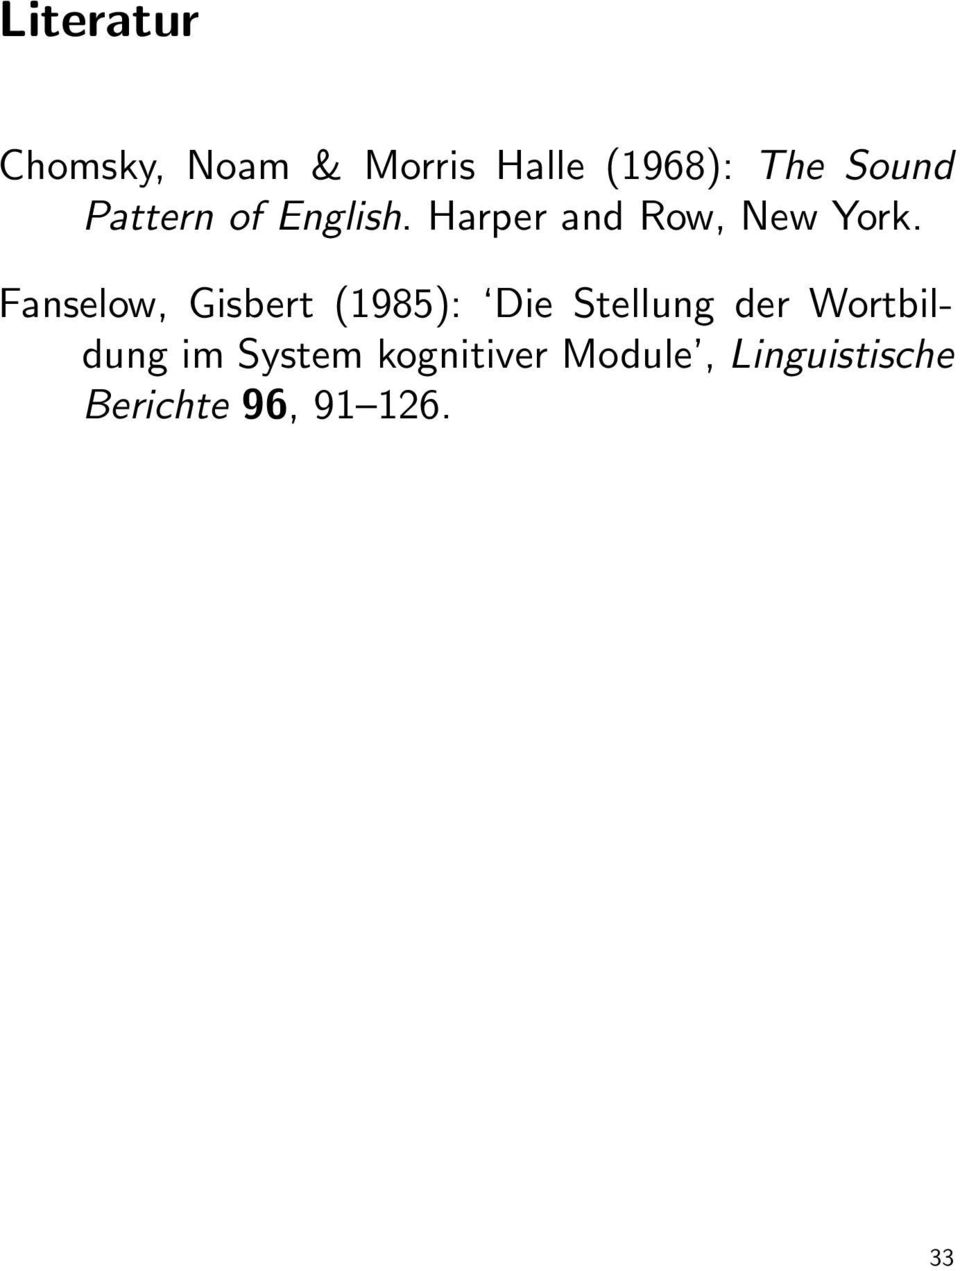 Fanselow, Gisbert (1985): Die Stellung der Wortbildung